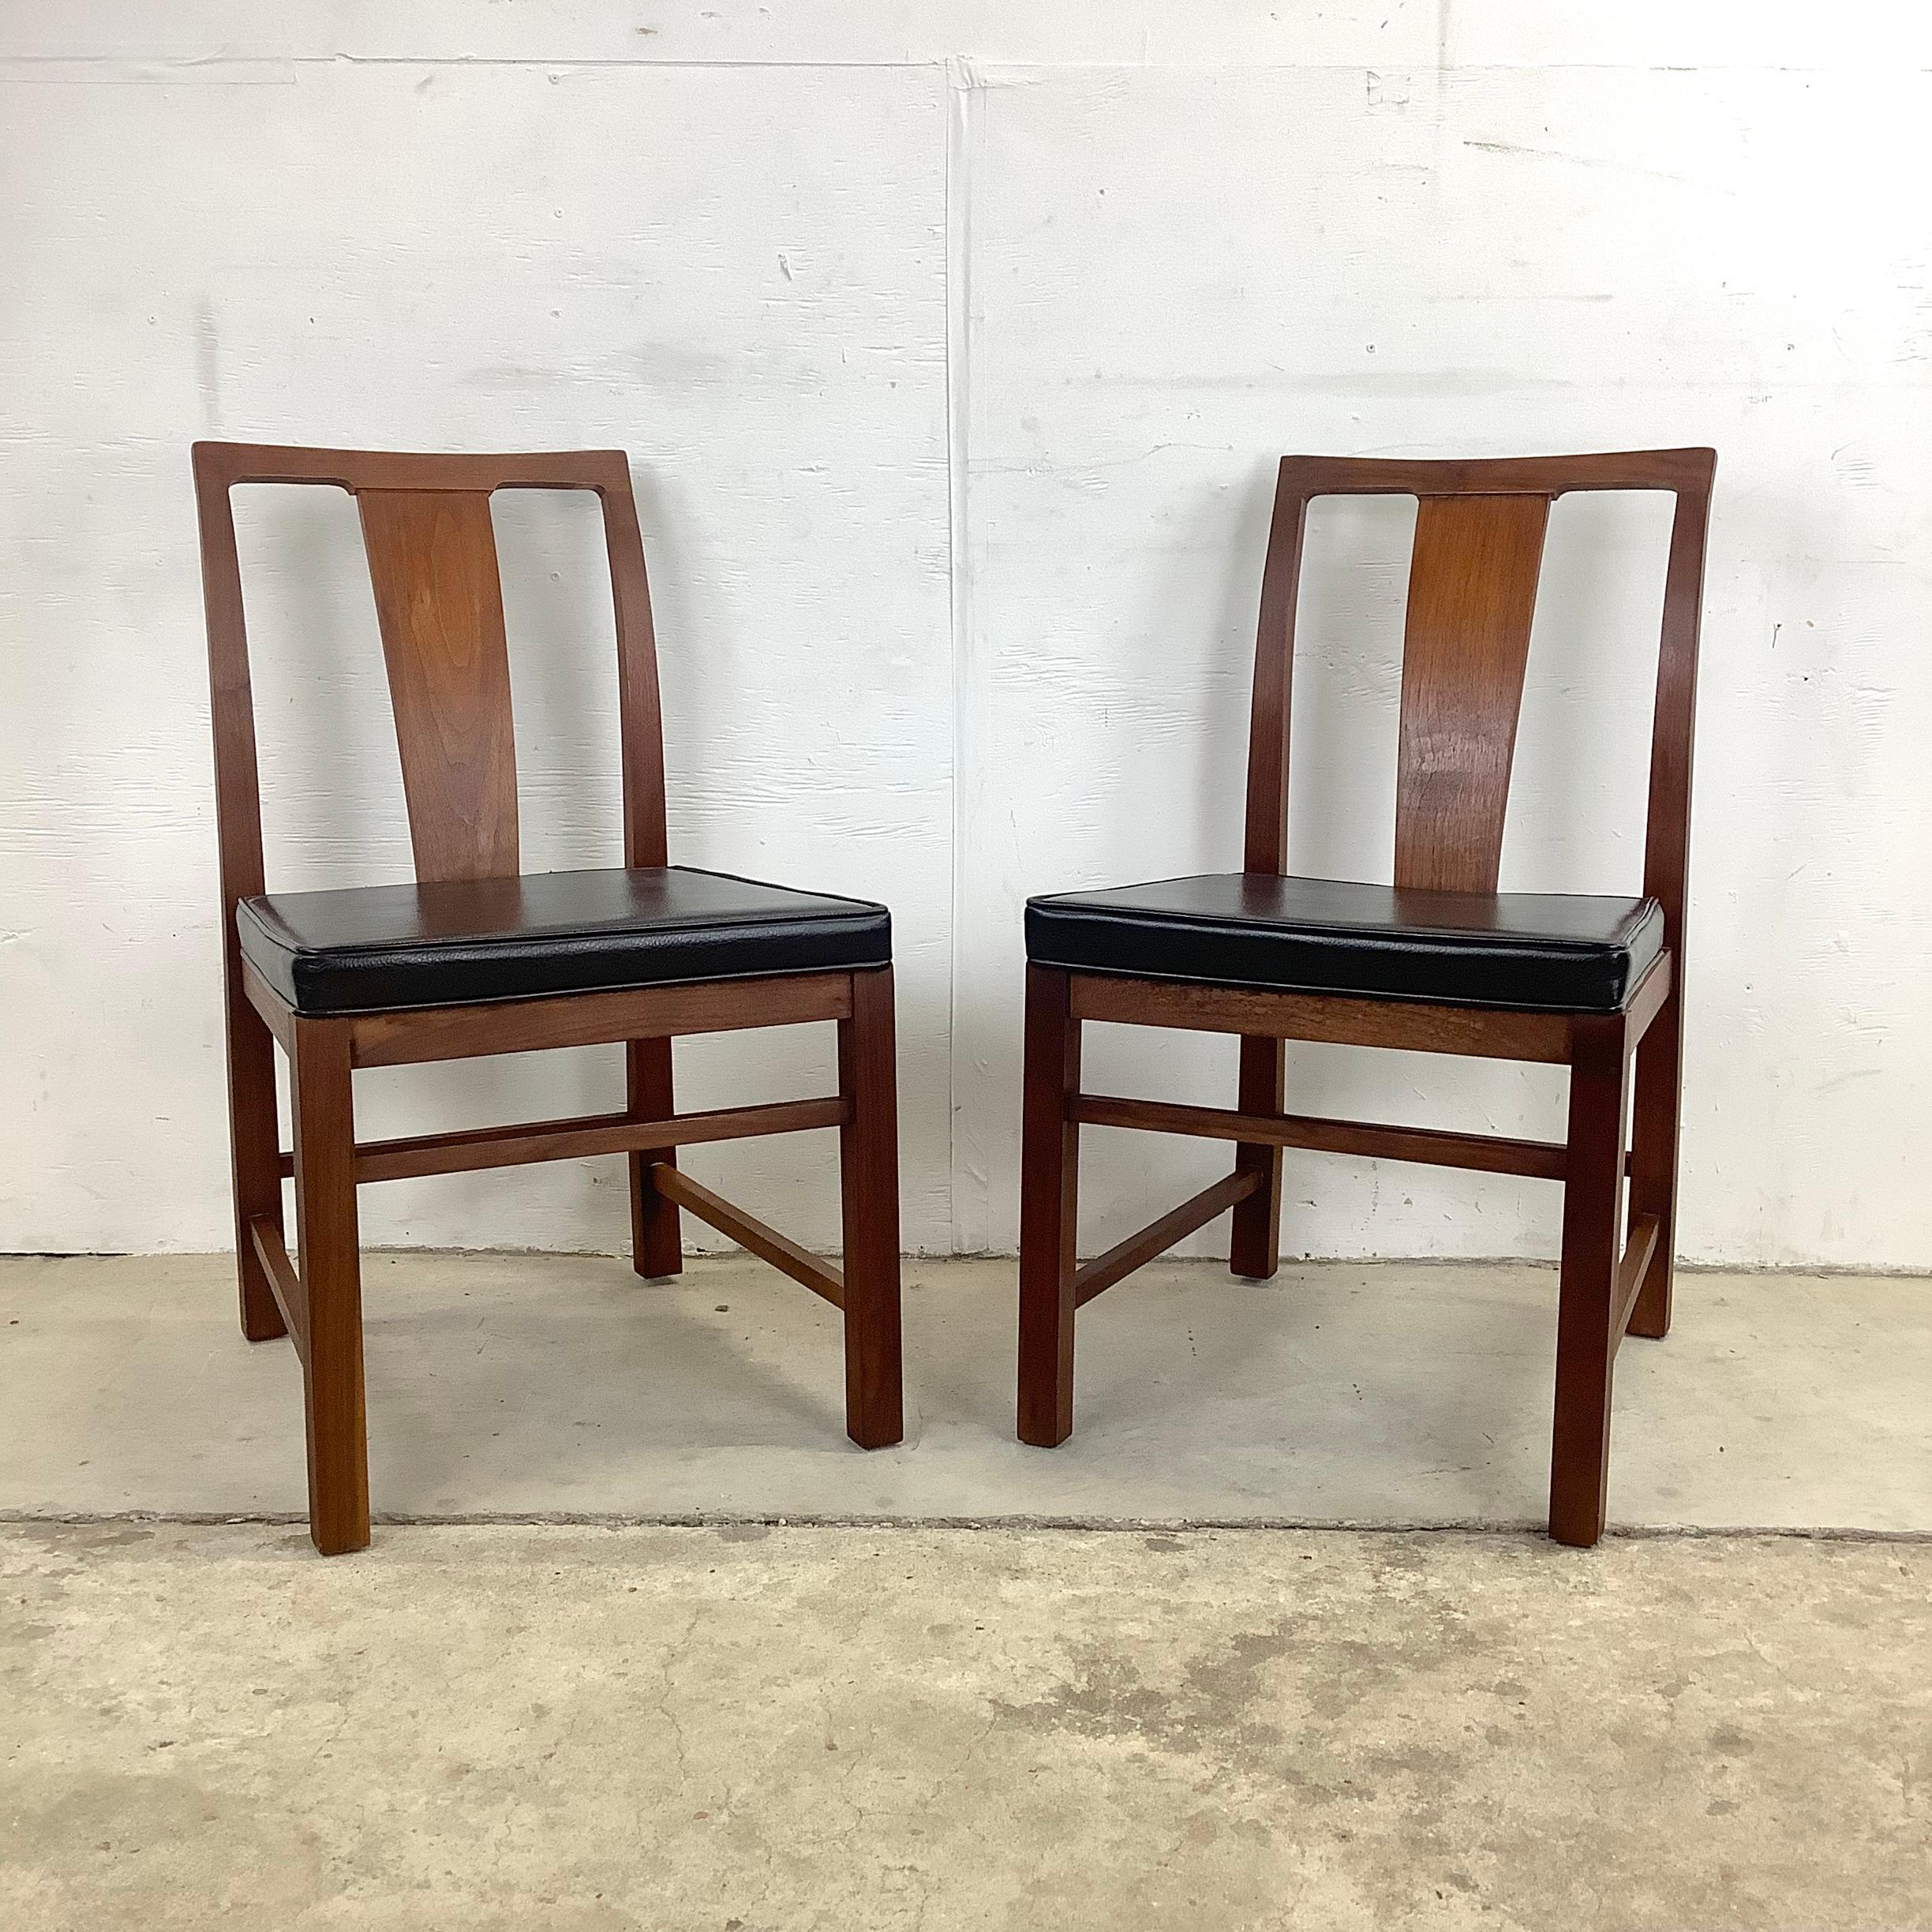 American Mid-Century Dark Walnut Dining Chairs by Hibriten Manufacturing - Set of Six